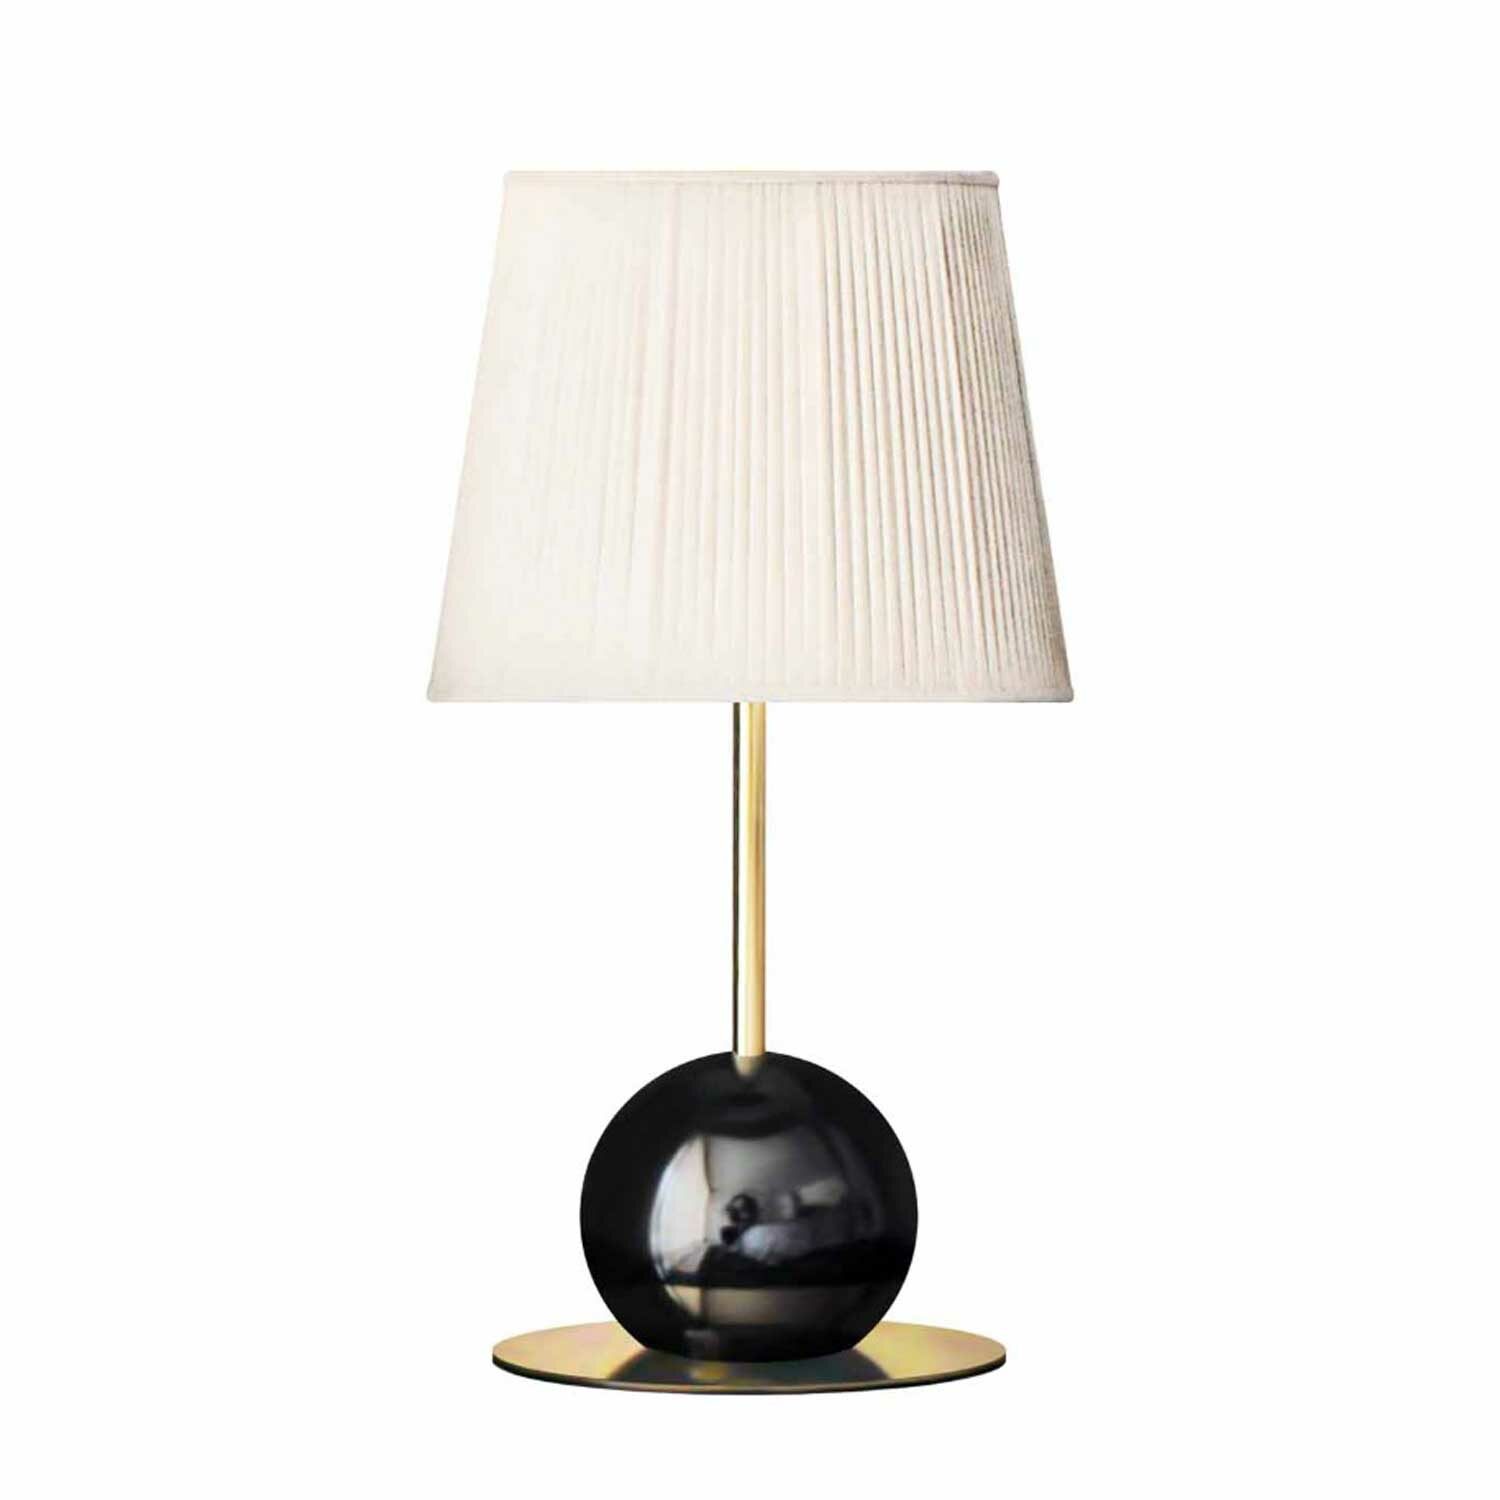 MUSEU table lamp